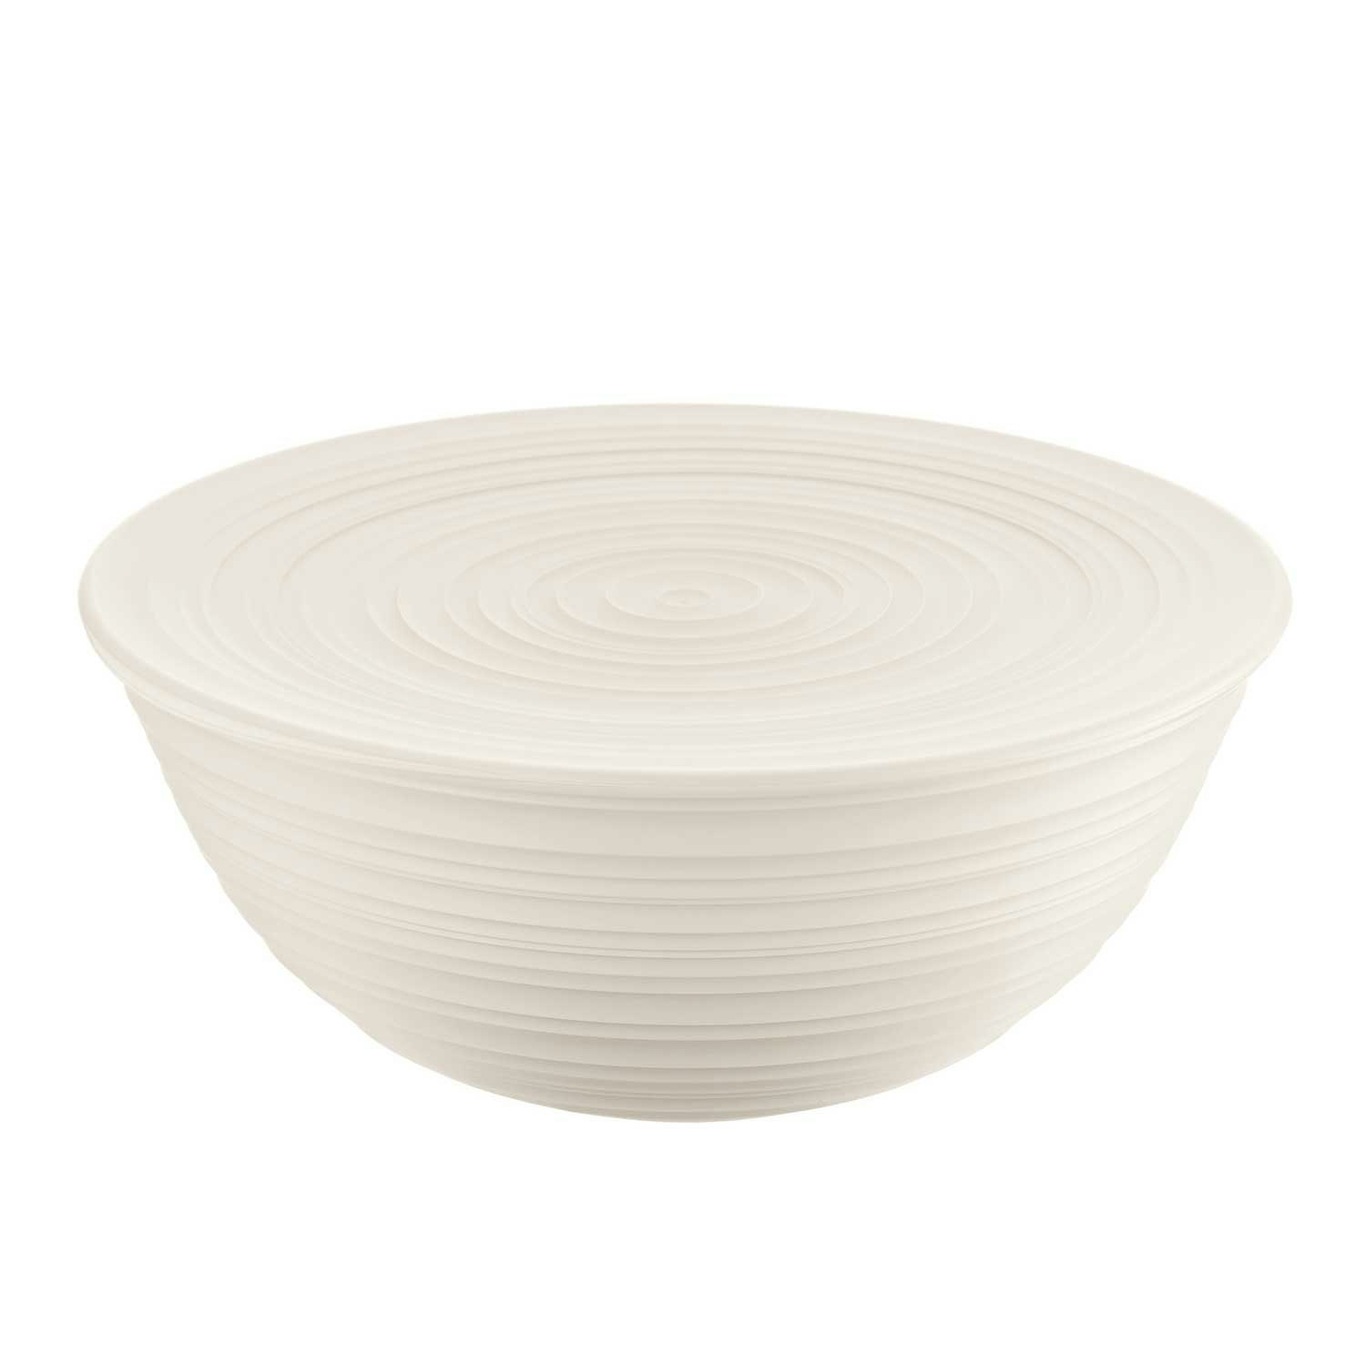 https://royaldesign.com/image/2/guzzini-tierra-bowl-with-lid-1?w=800&quality=80